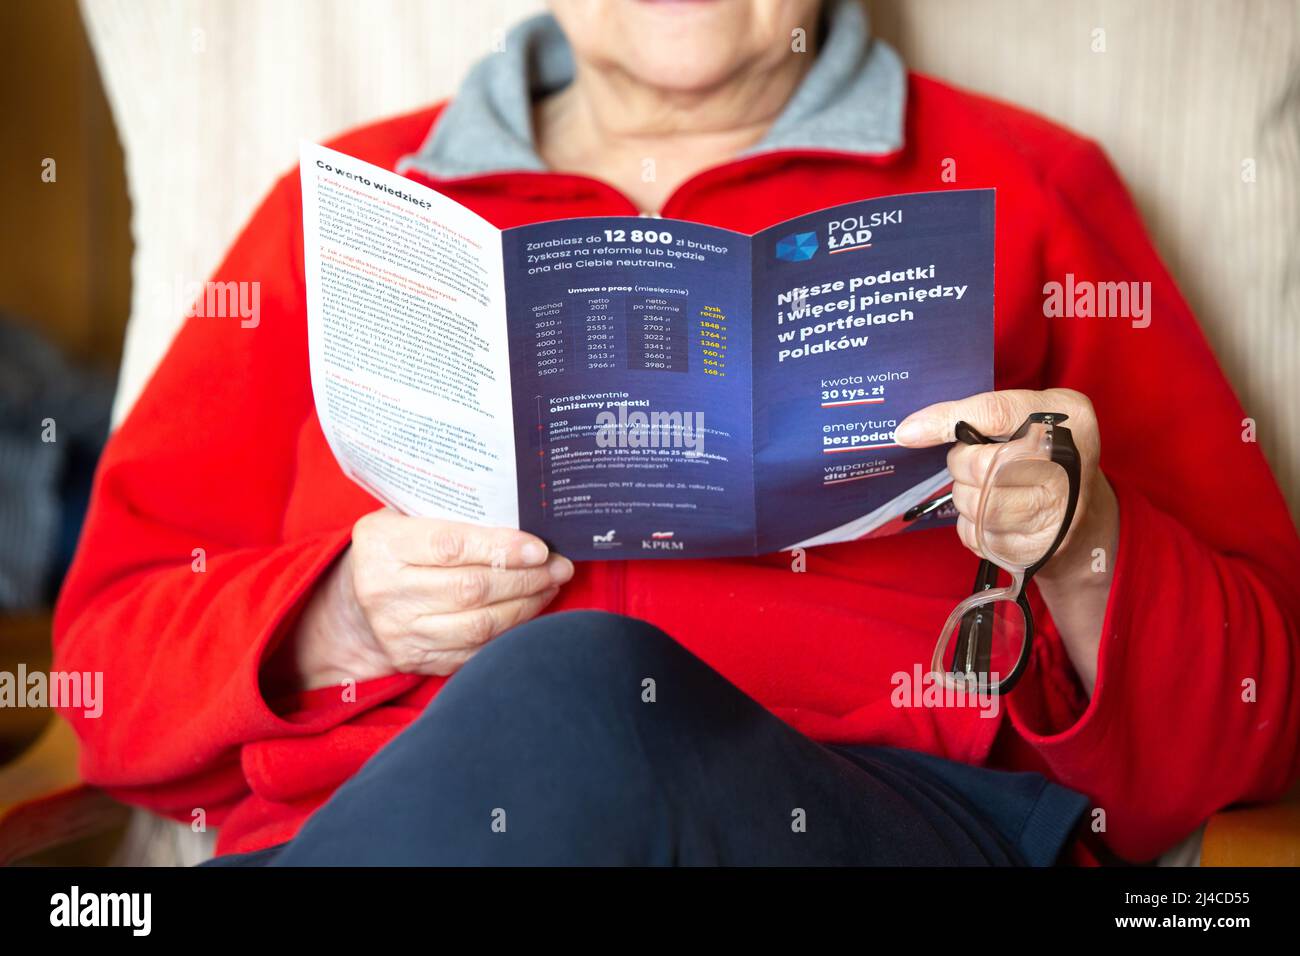 Poznan, Poland- March 3,2022: Illustrative editorial of a unidentified senior woman reading 'Polski Lad' (Polish Order) pamphlet. Stock Photo